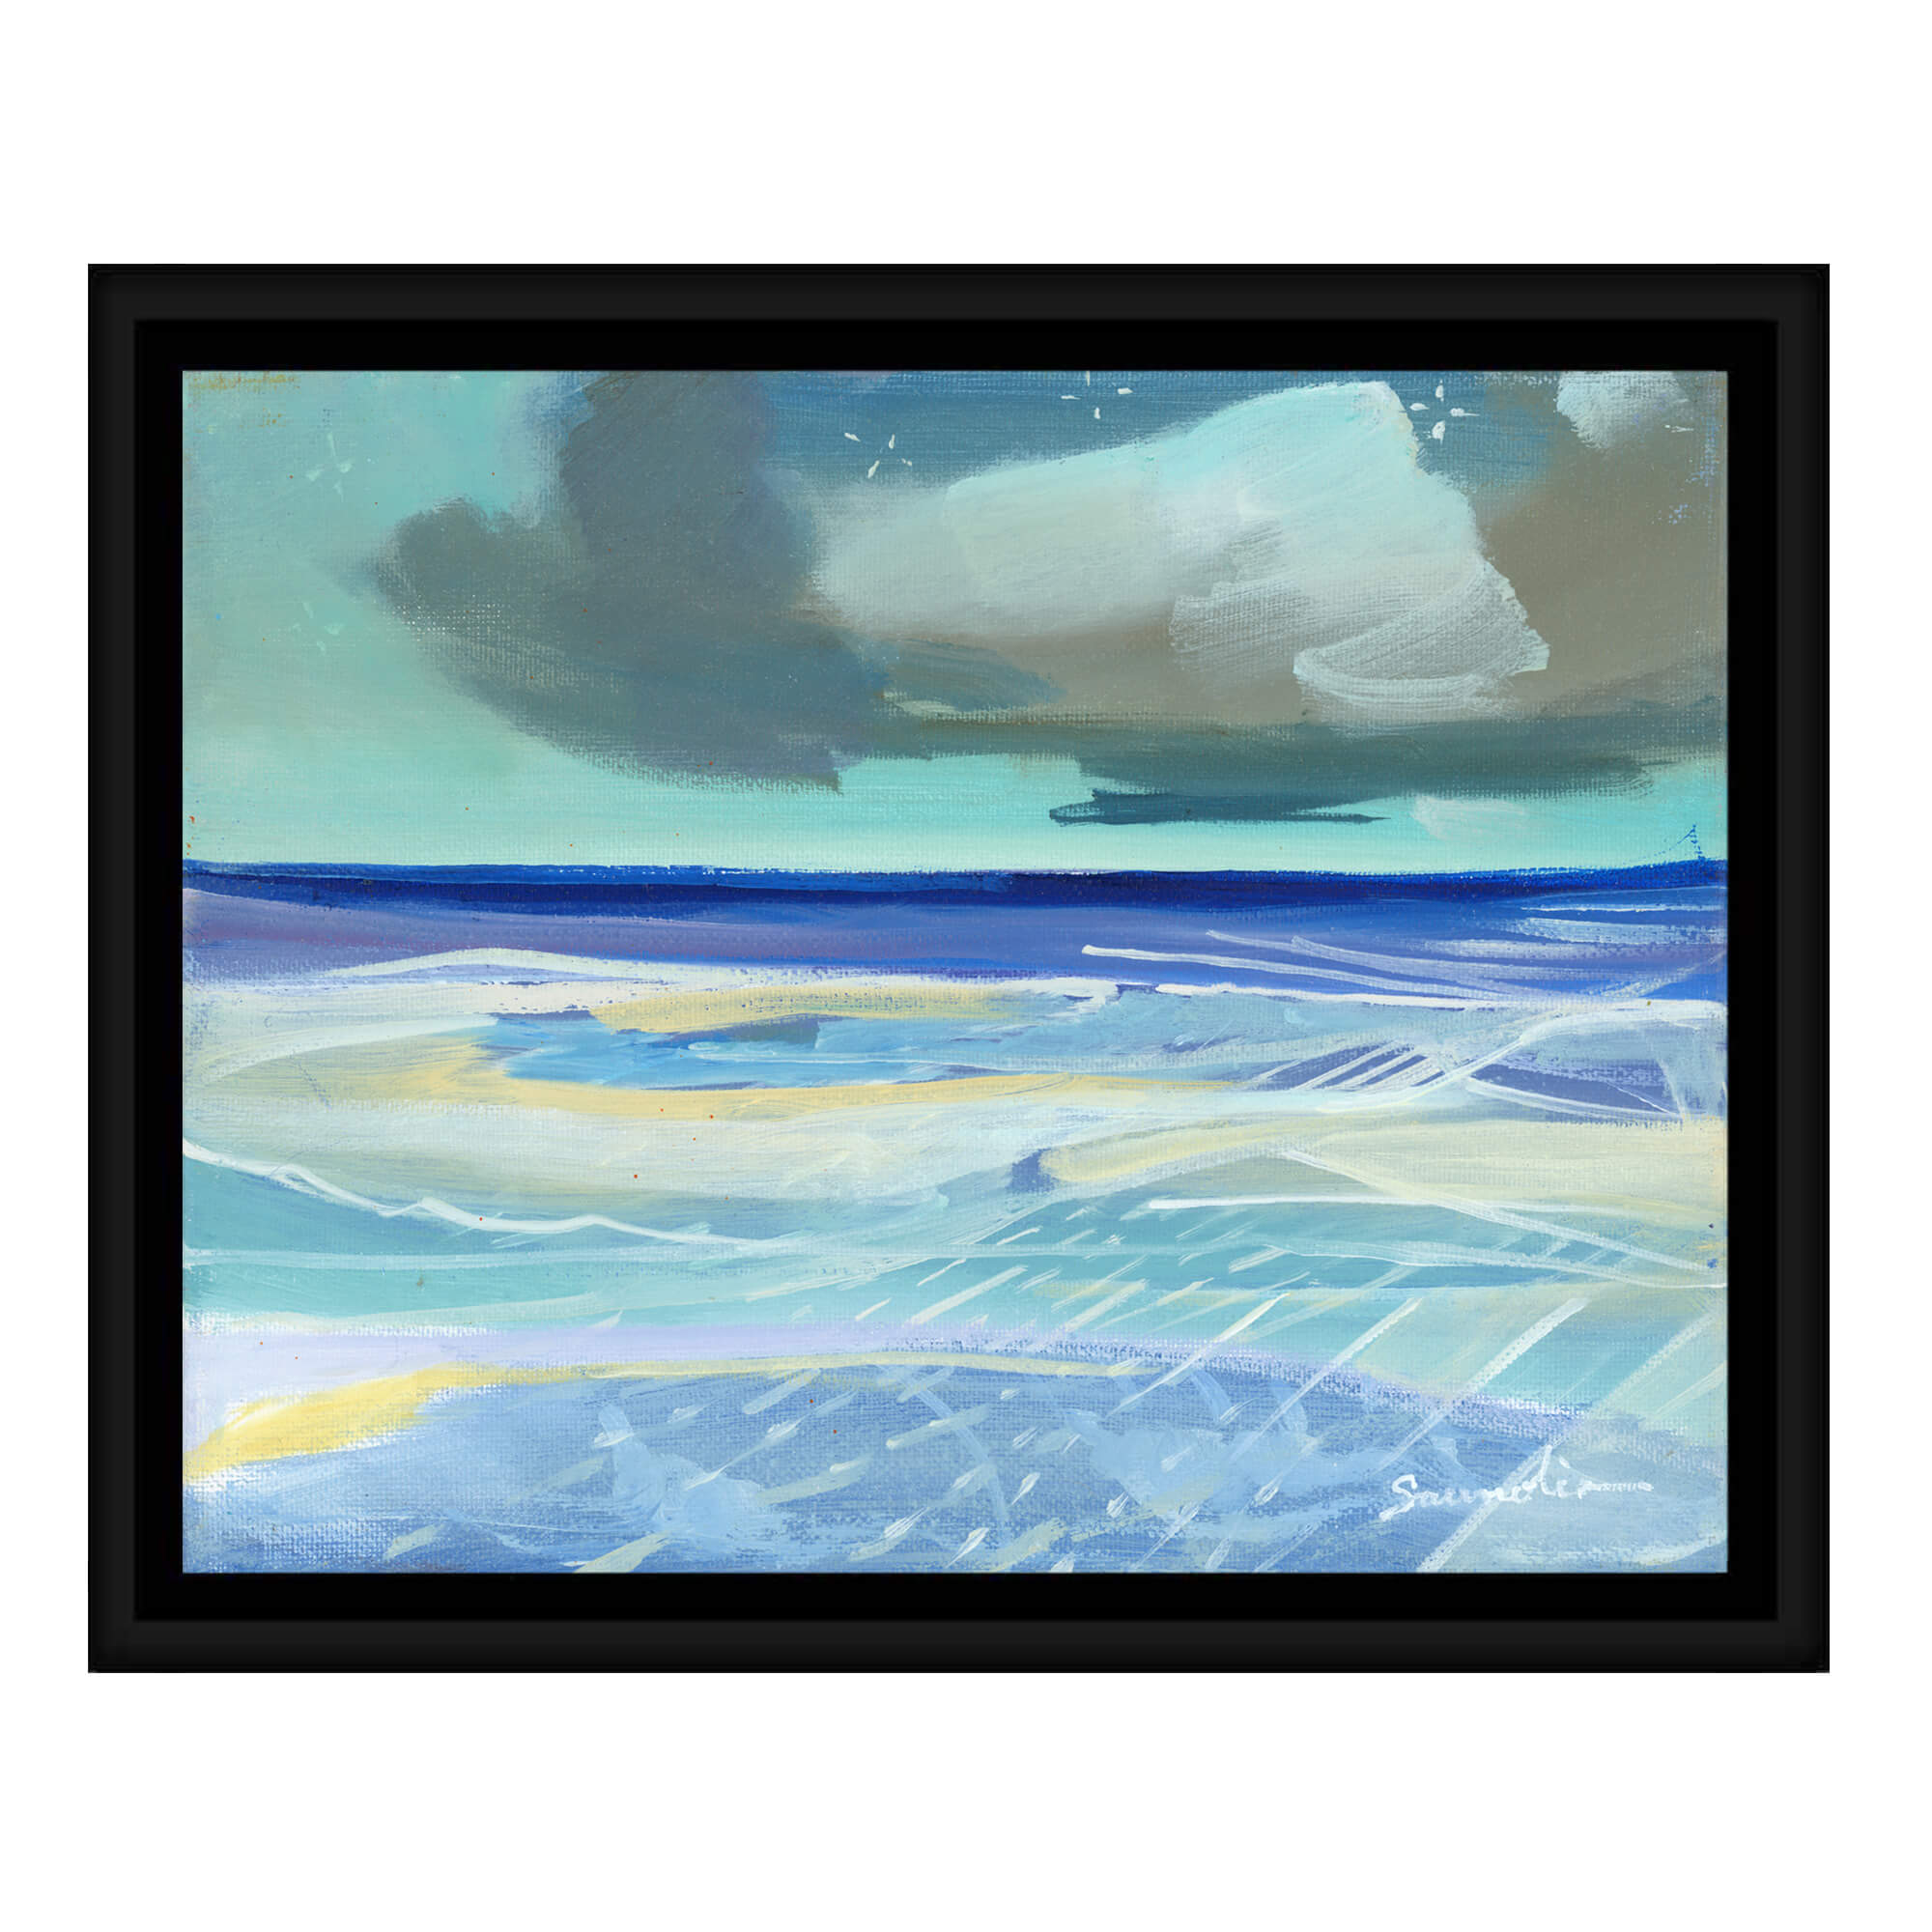 Semi-abstract blue and teal horizon and seascape by Hawaii artist Saumolia Puapuaga